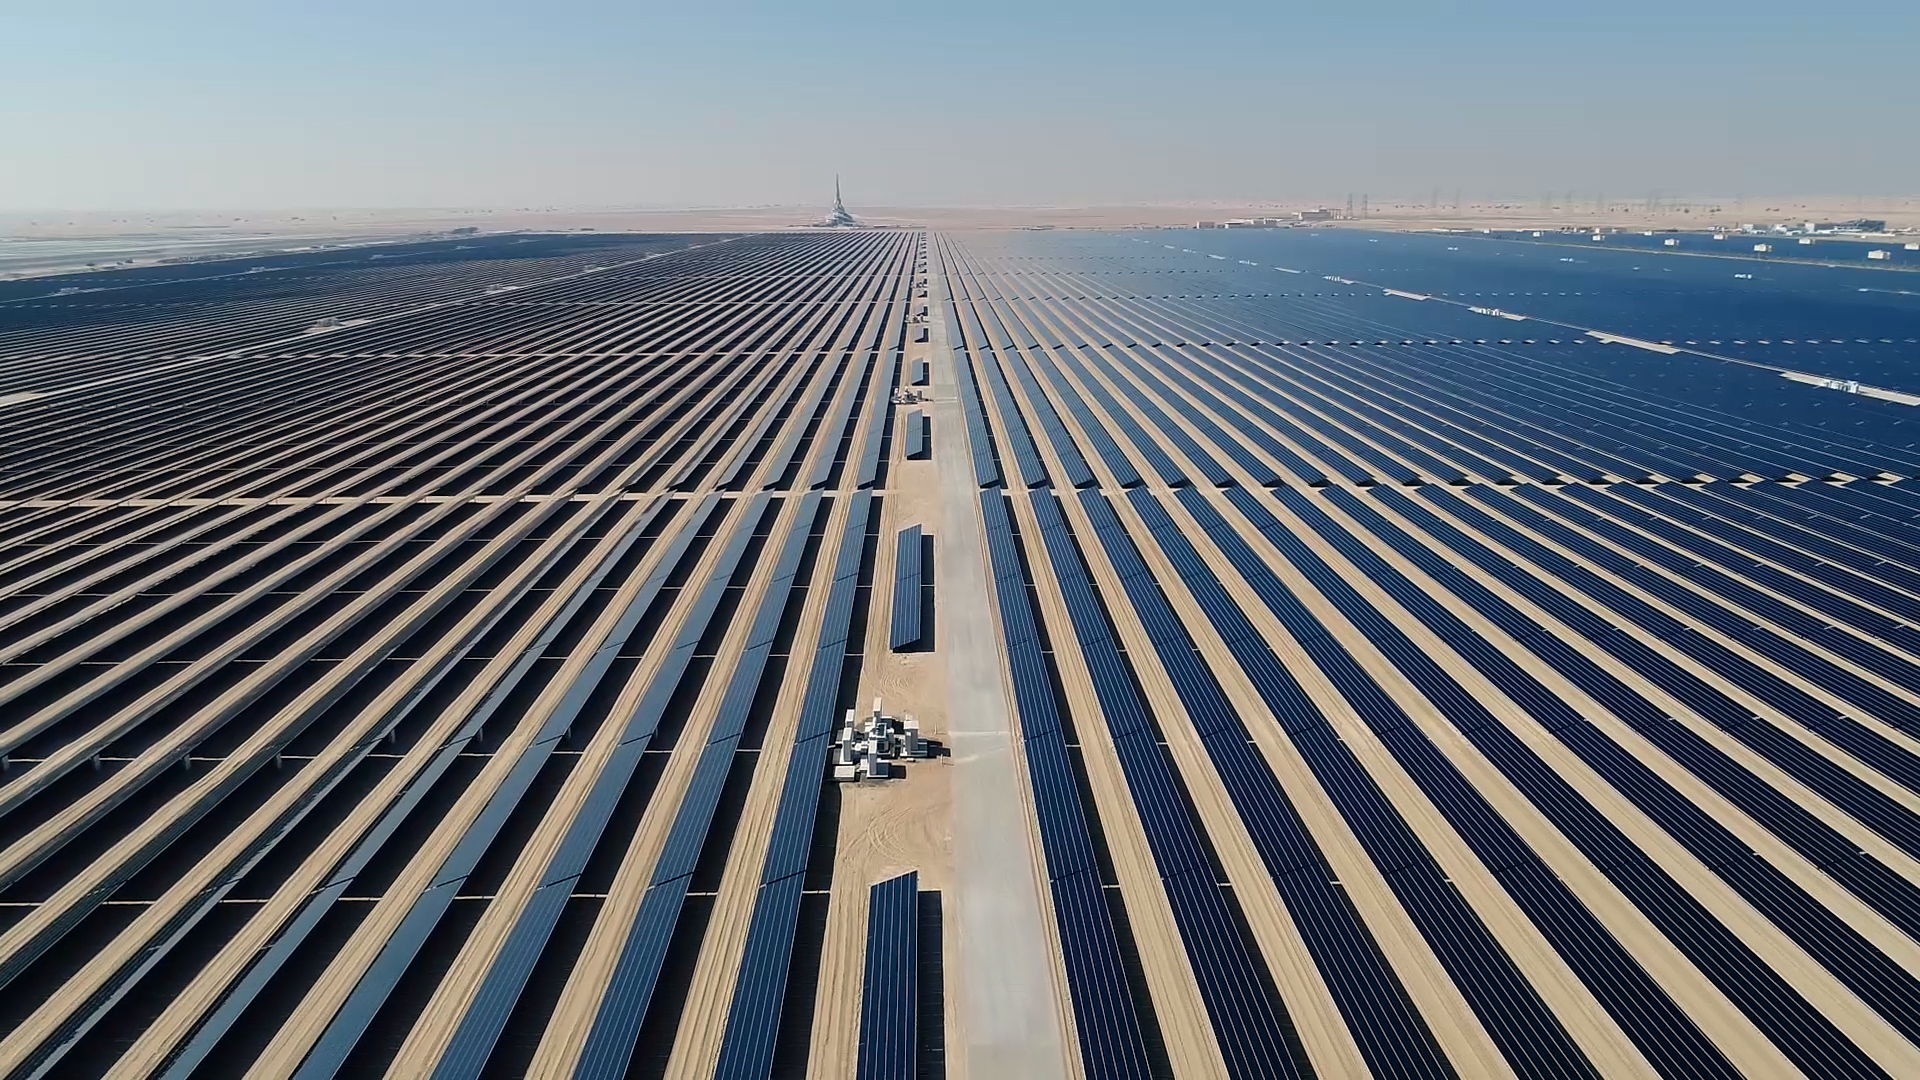 Mohammed bin Rashid Al Maktoum Solar Park key pillar to reach 100% clean energy in Dubai by 2050